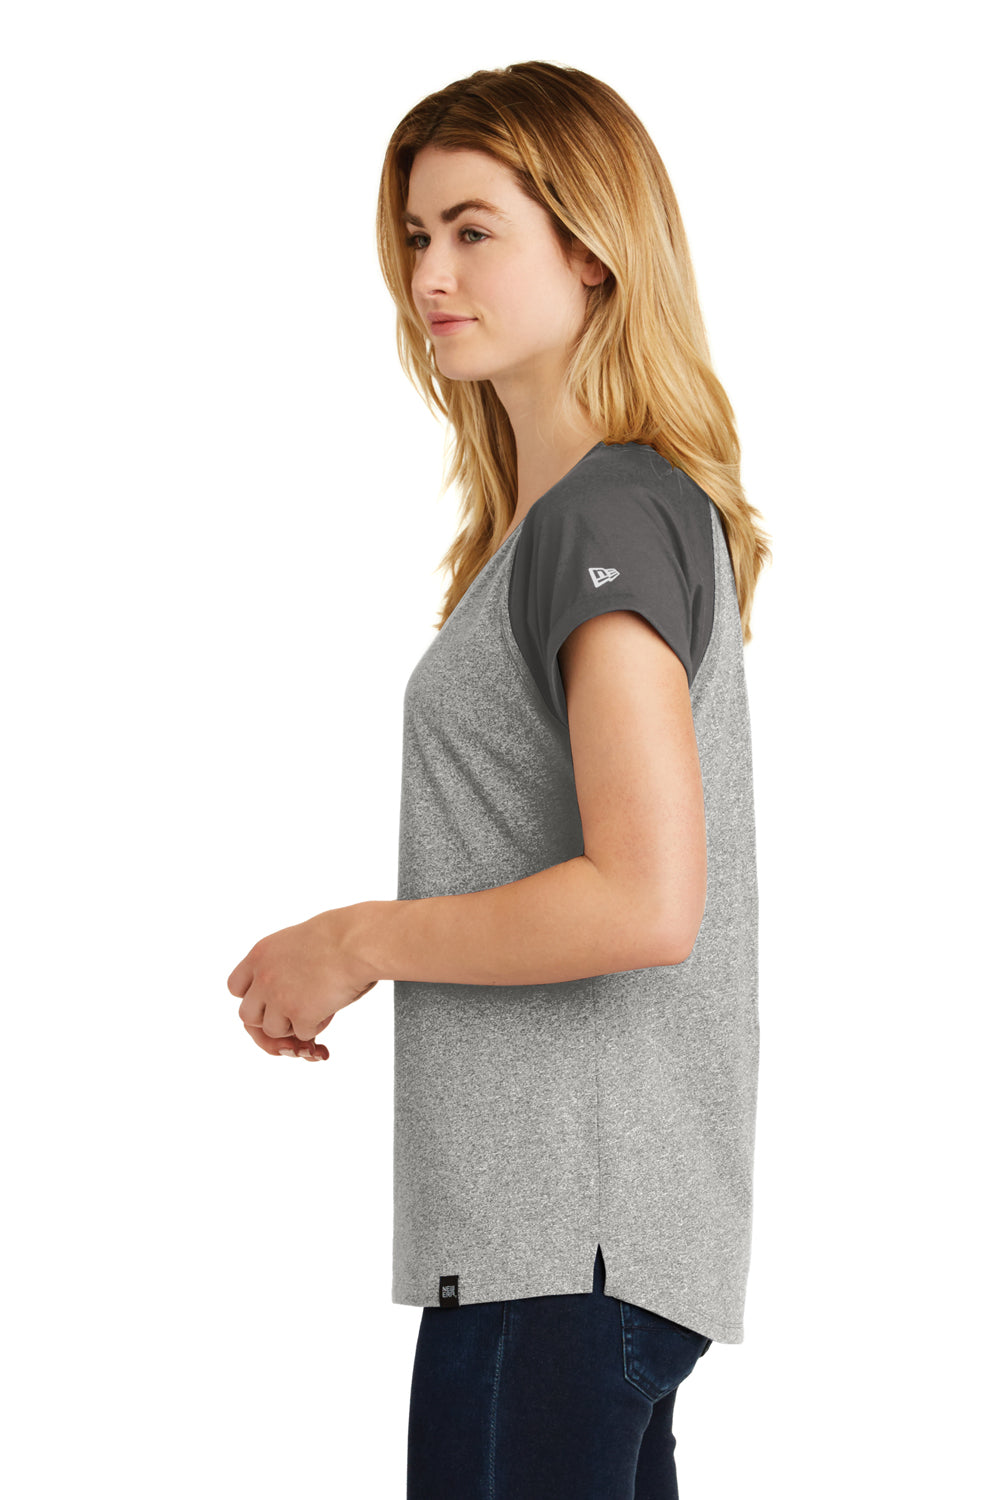 New Era LNEA107 Womens Heritage Short Sleeve Crewneck T-Shirt Graphite Grey/Light Graphite Grey Twist Side